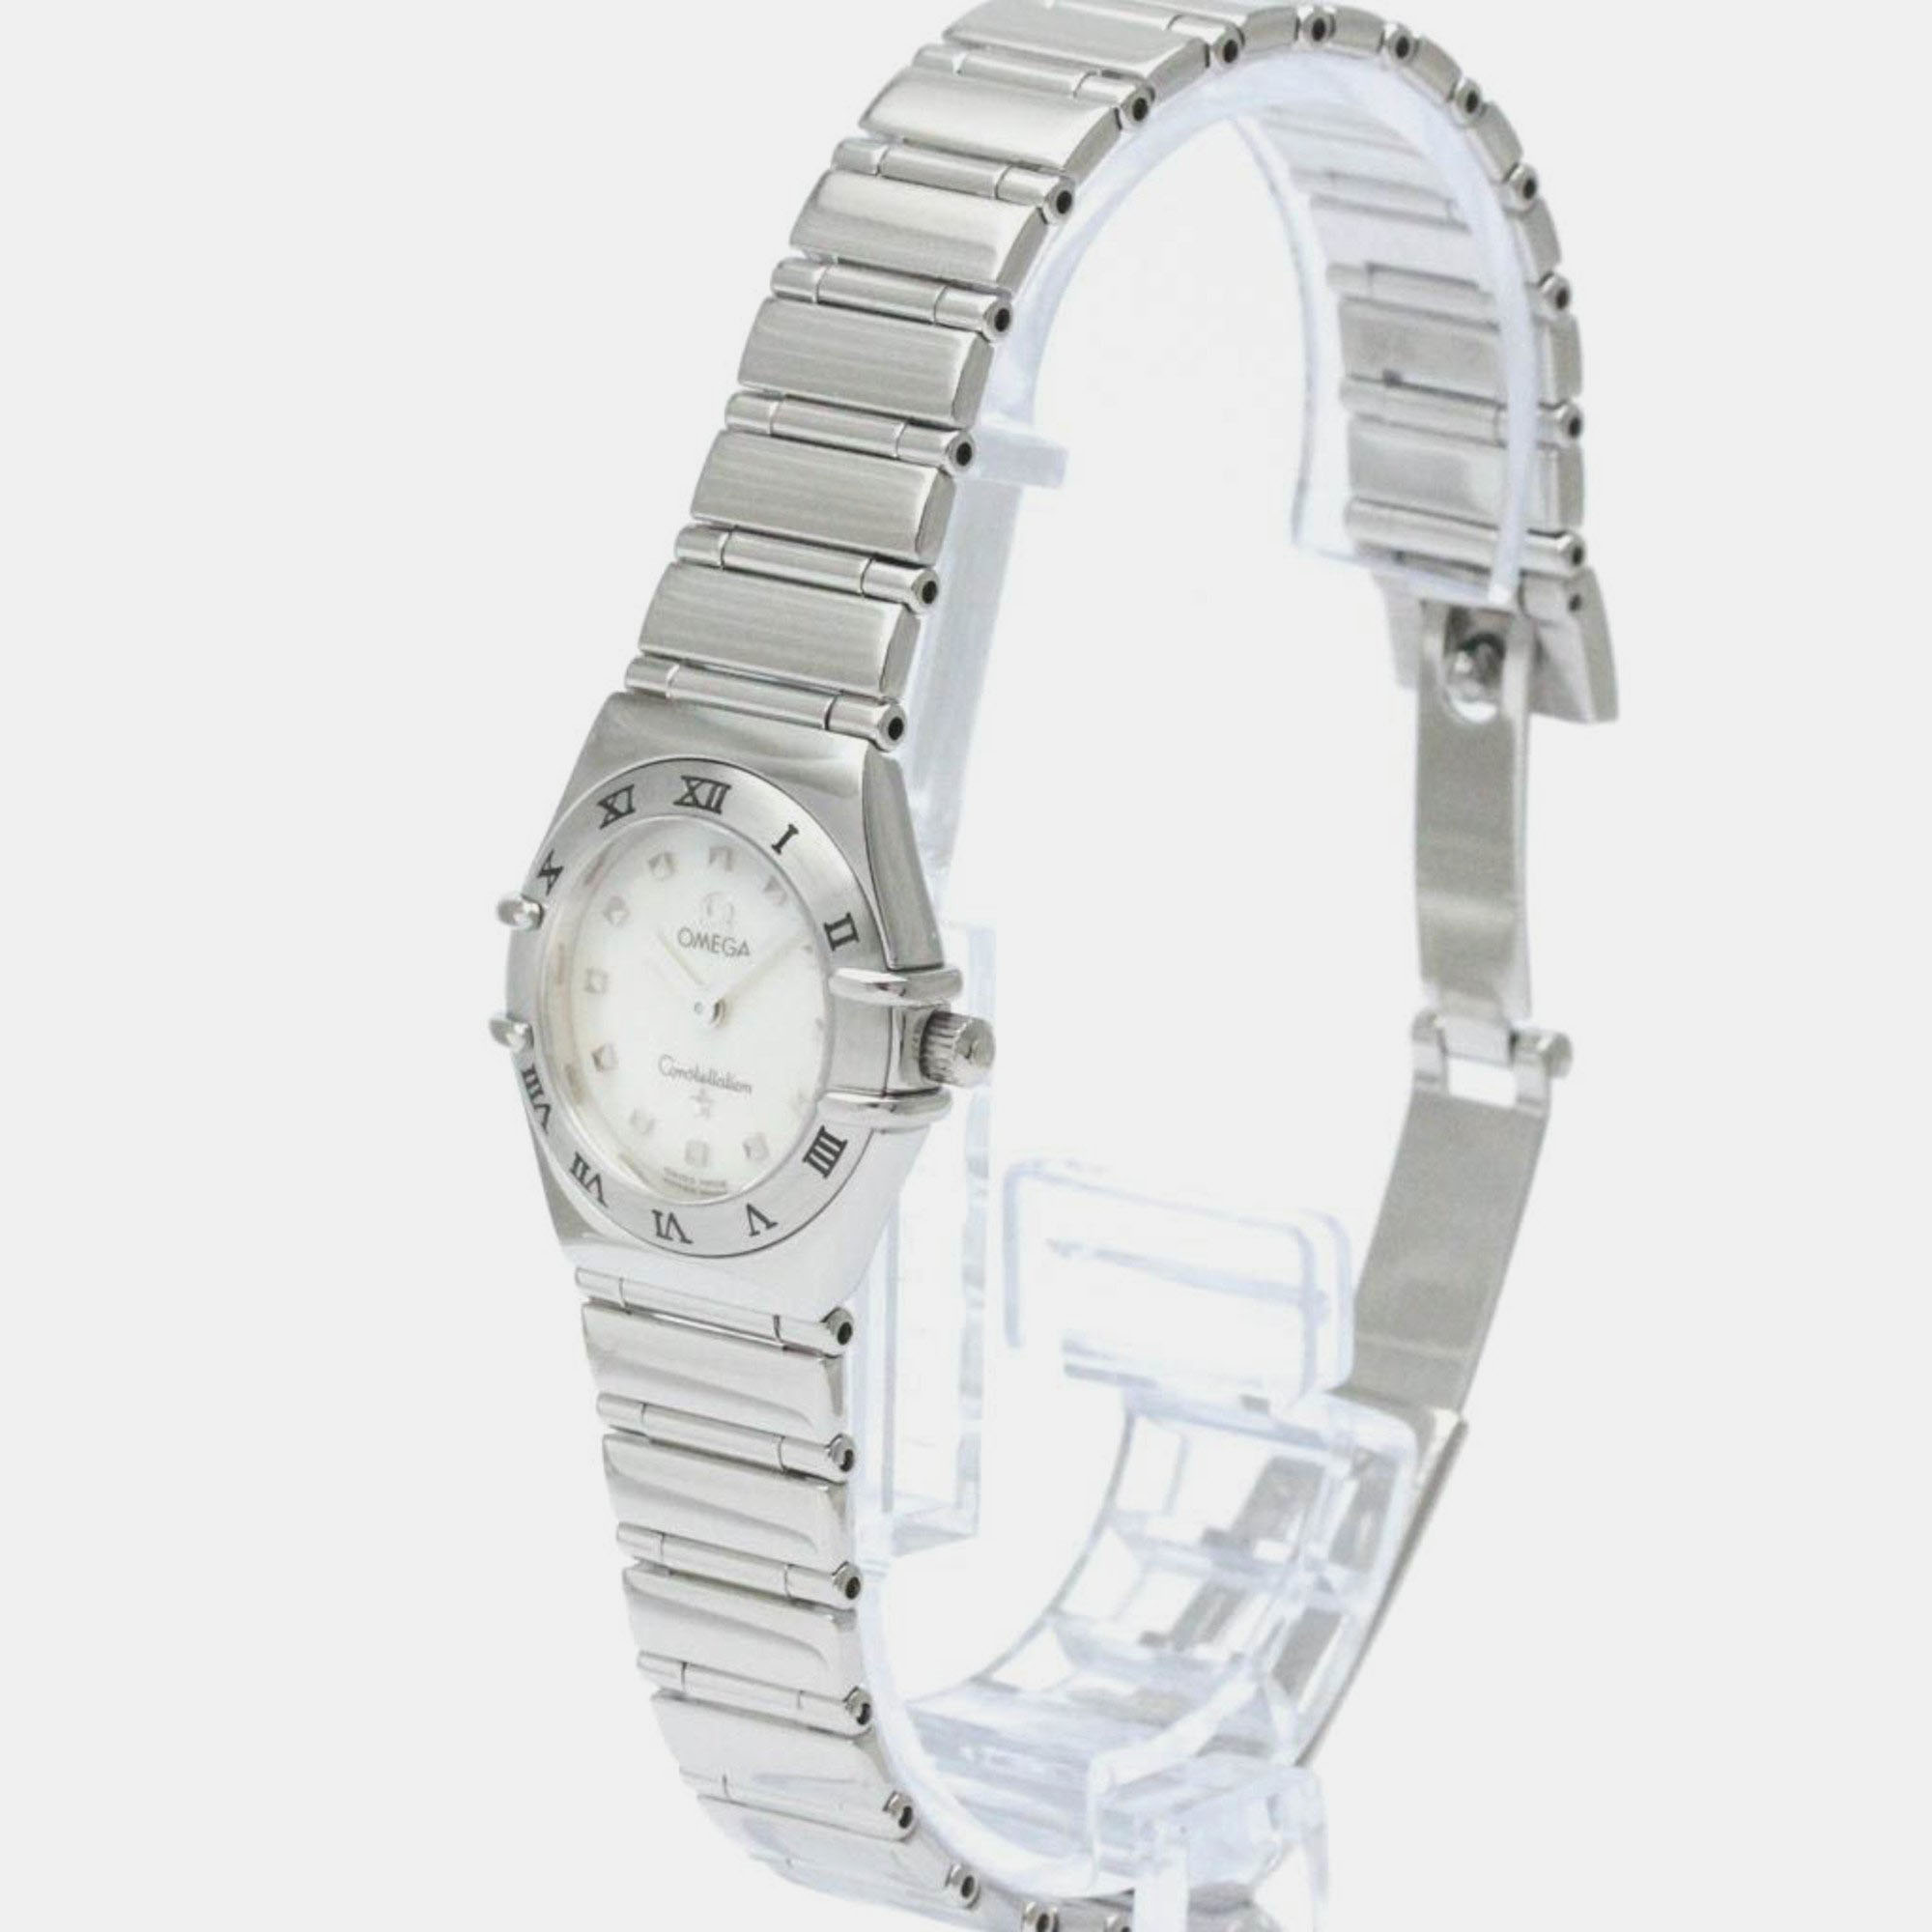 

Omega White Shell Stainless Steel Constellation 1561.71 Quartz Women's Wristwatch 22 mm